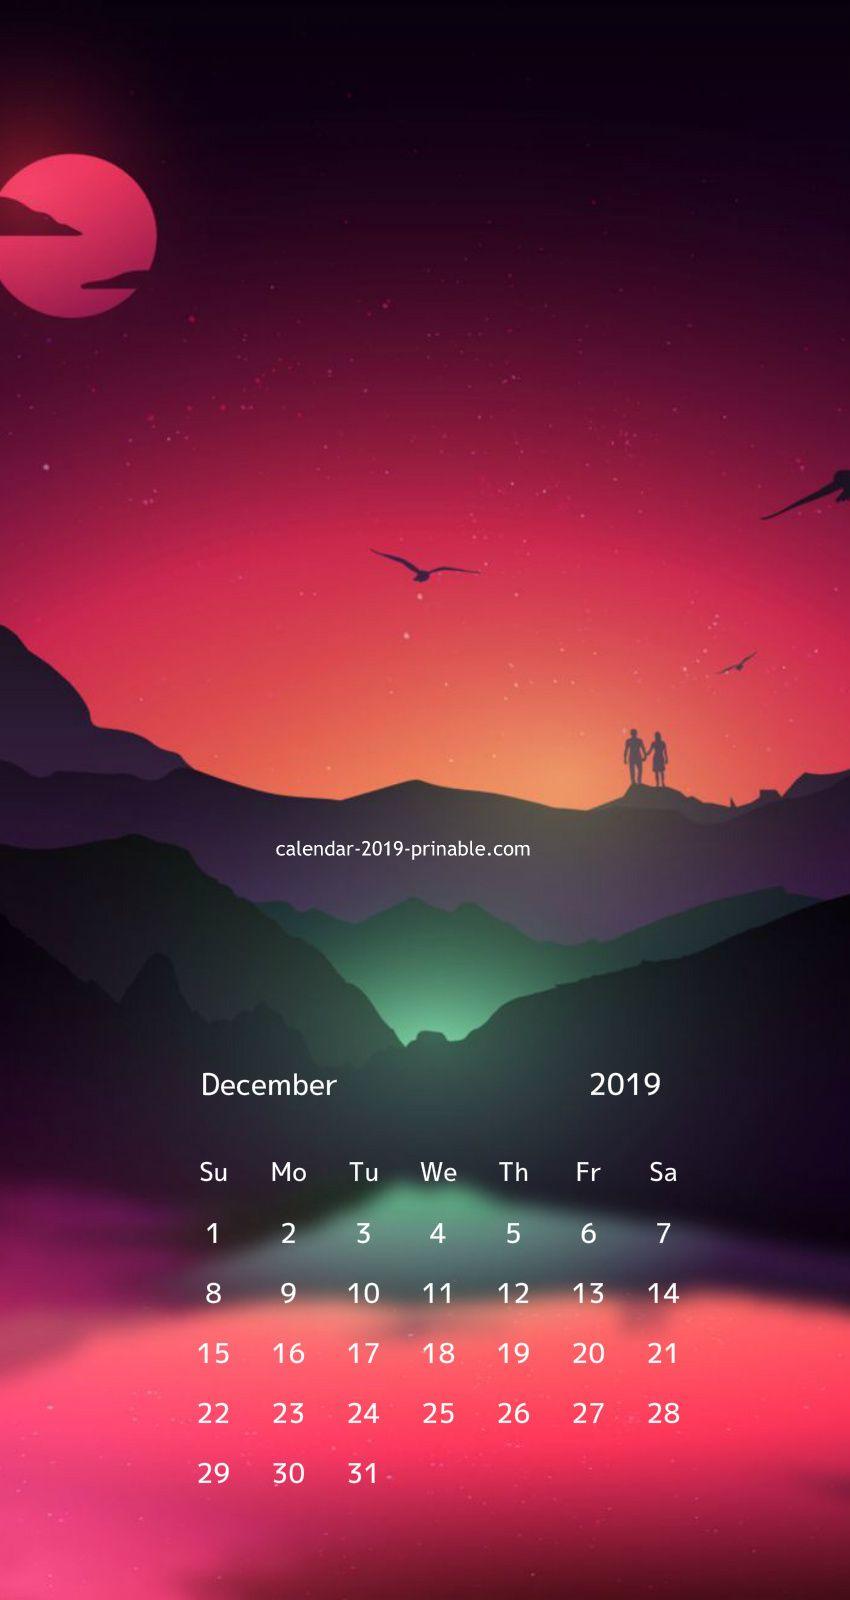 december 2019 iphone calendar wallpaper. naptár in 2019